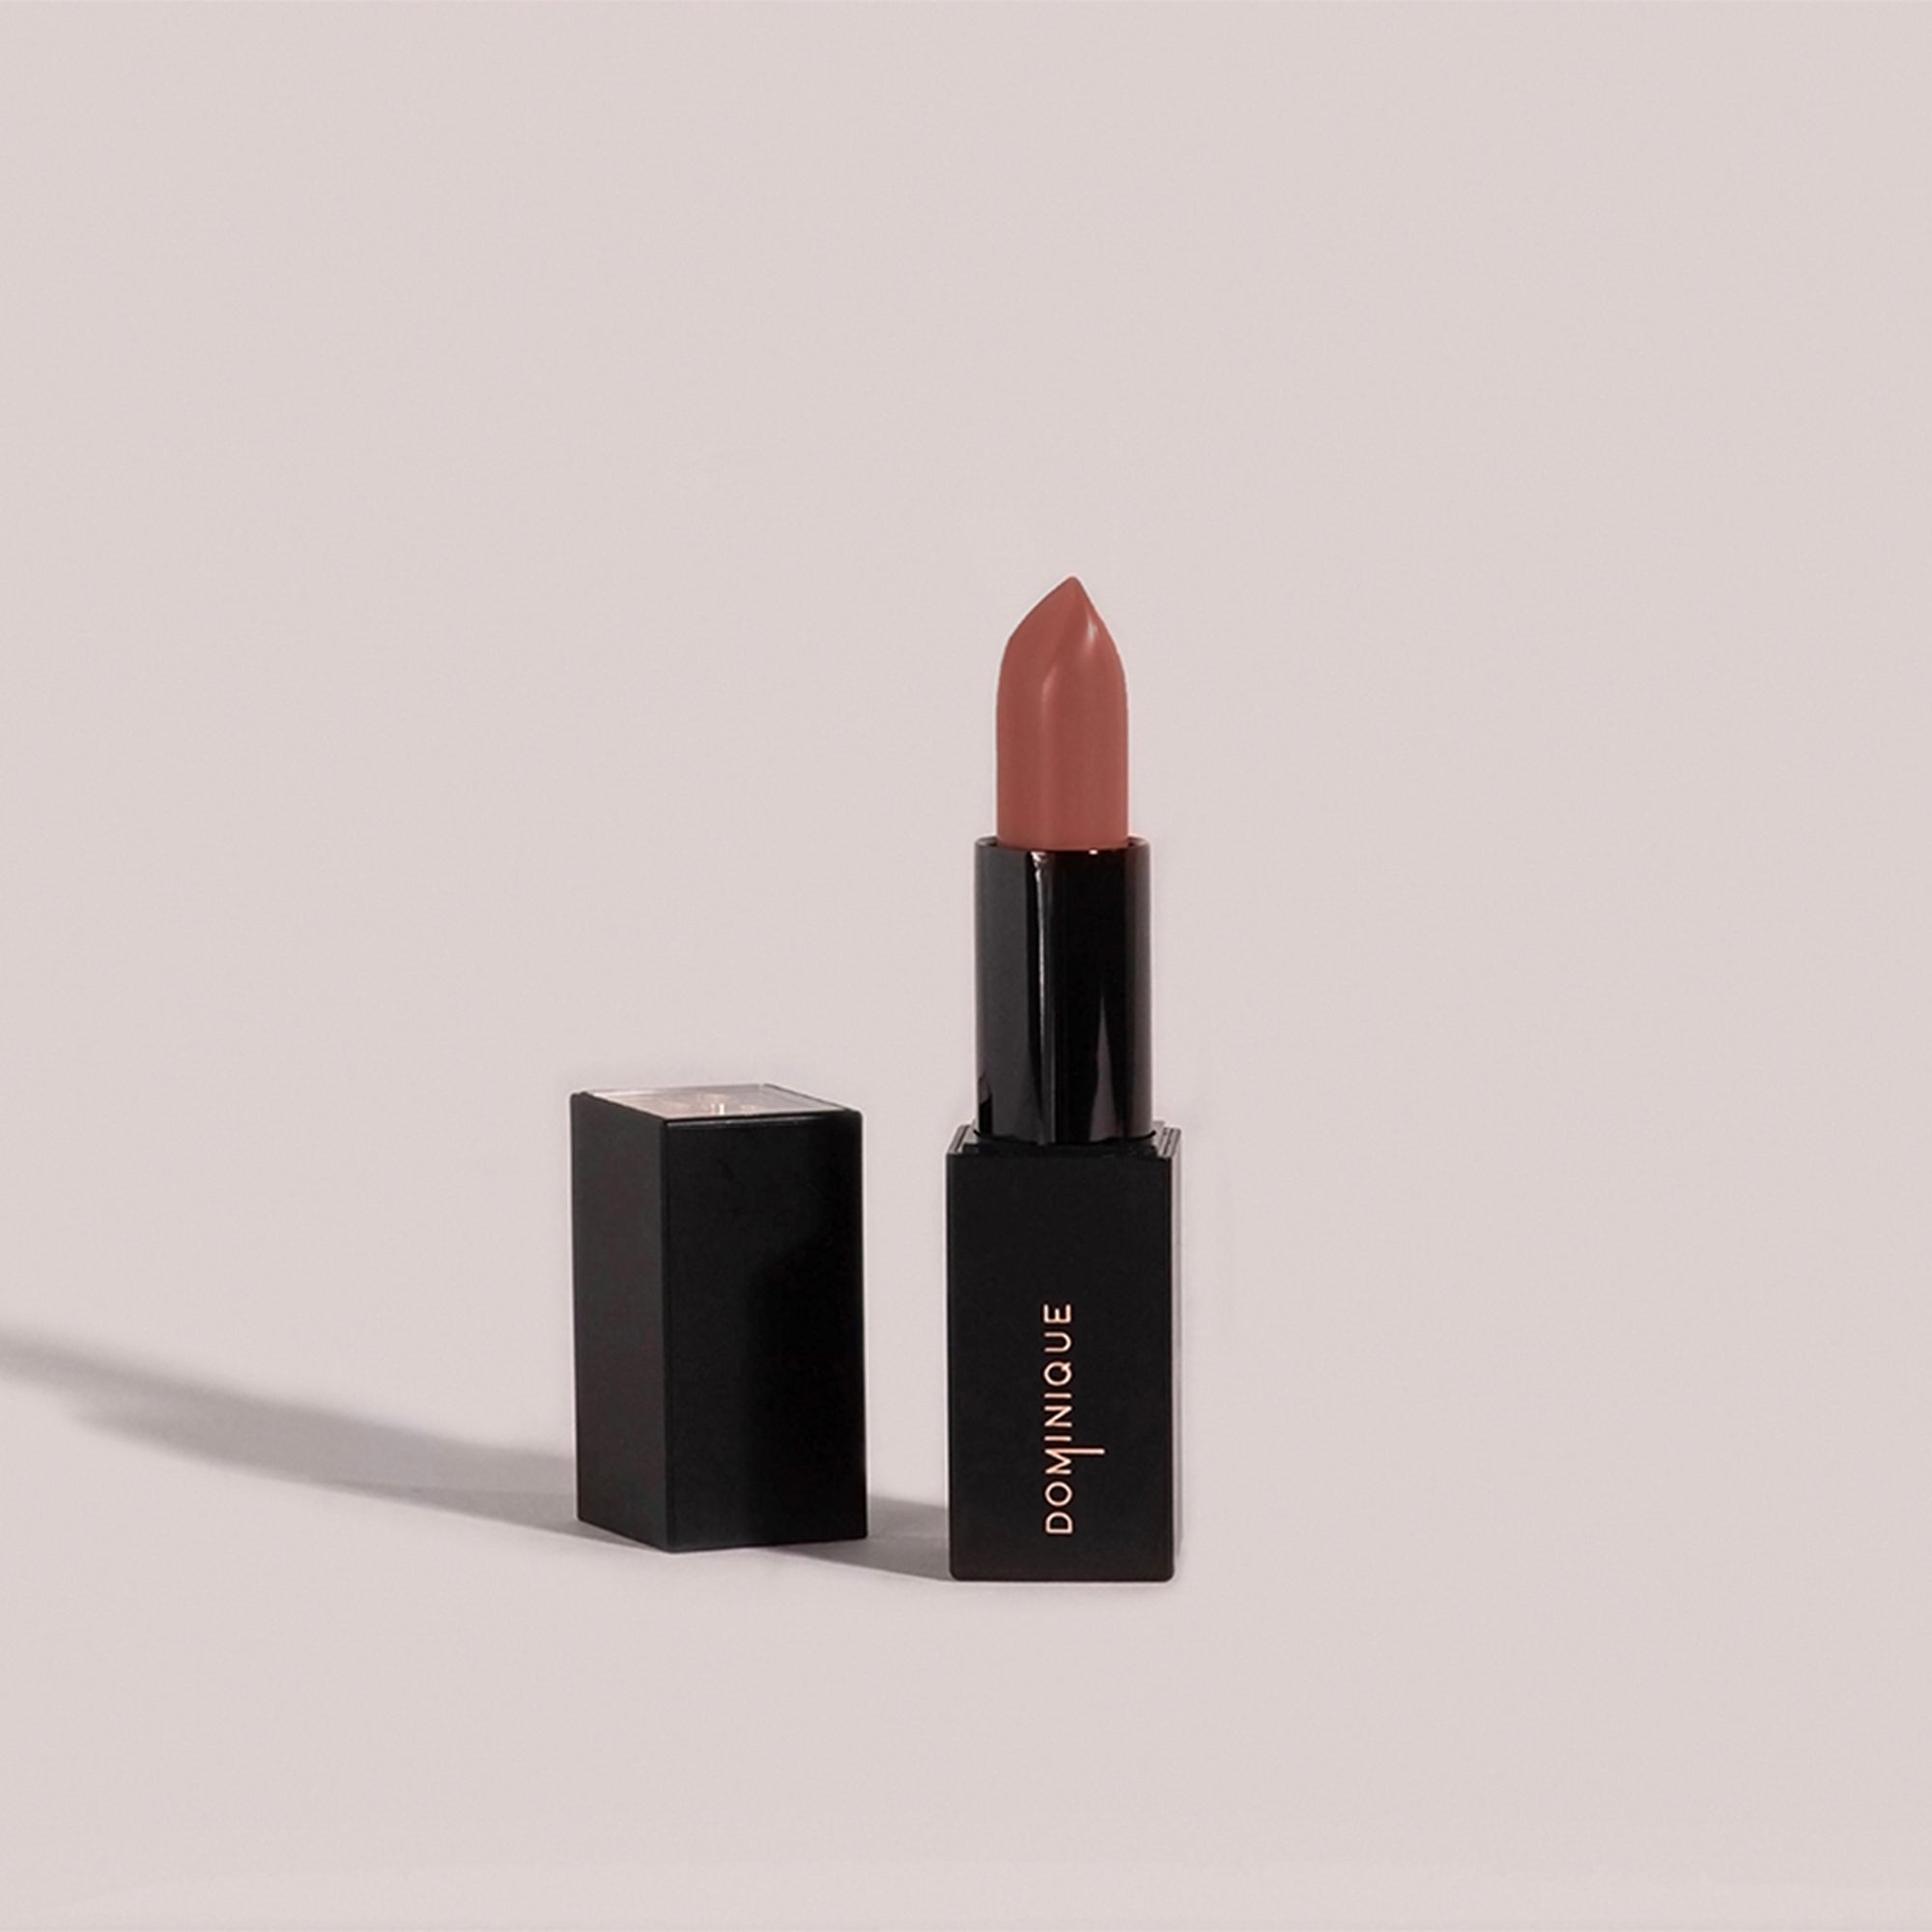 Soft Focus Demi Matte Lipstick - She's A Tease#She's a tease